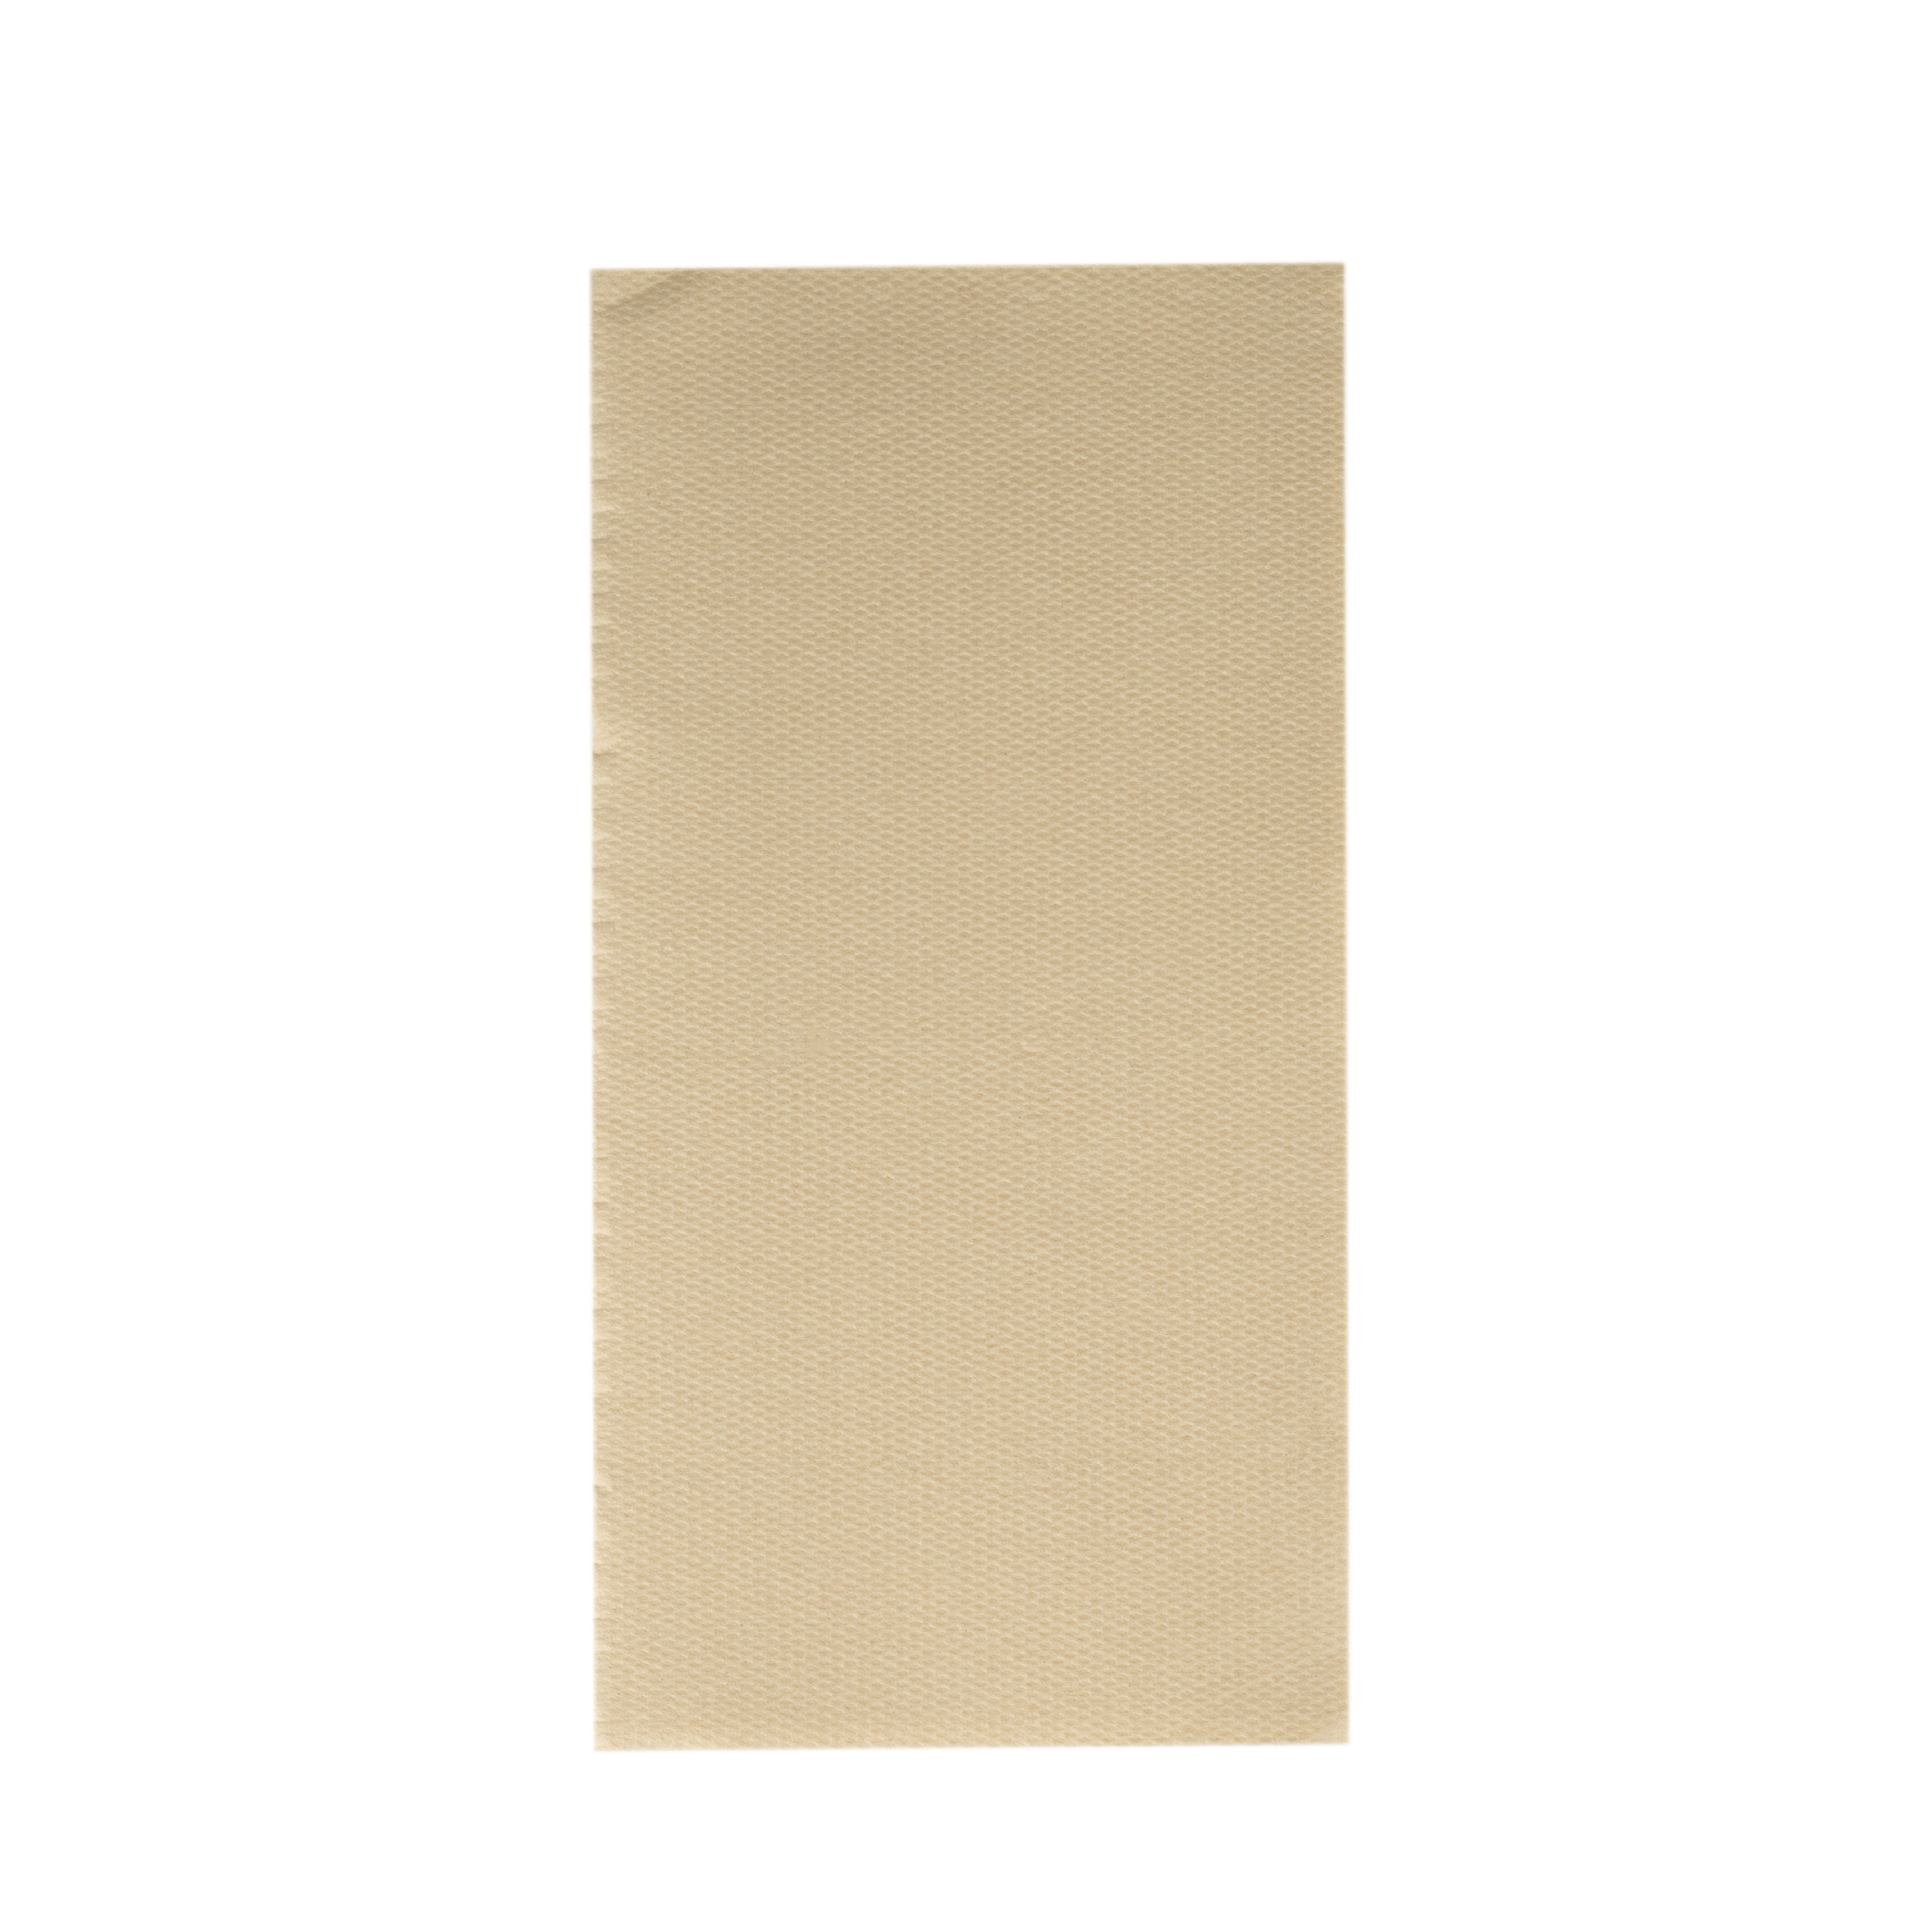 Mank Serviette Softpoint 1/8 Falz, 40 x 40 cm, Basic sand